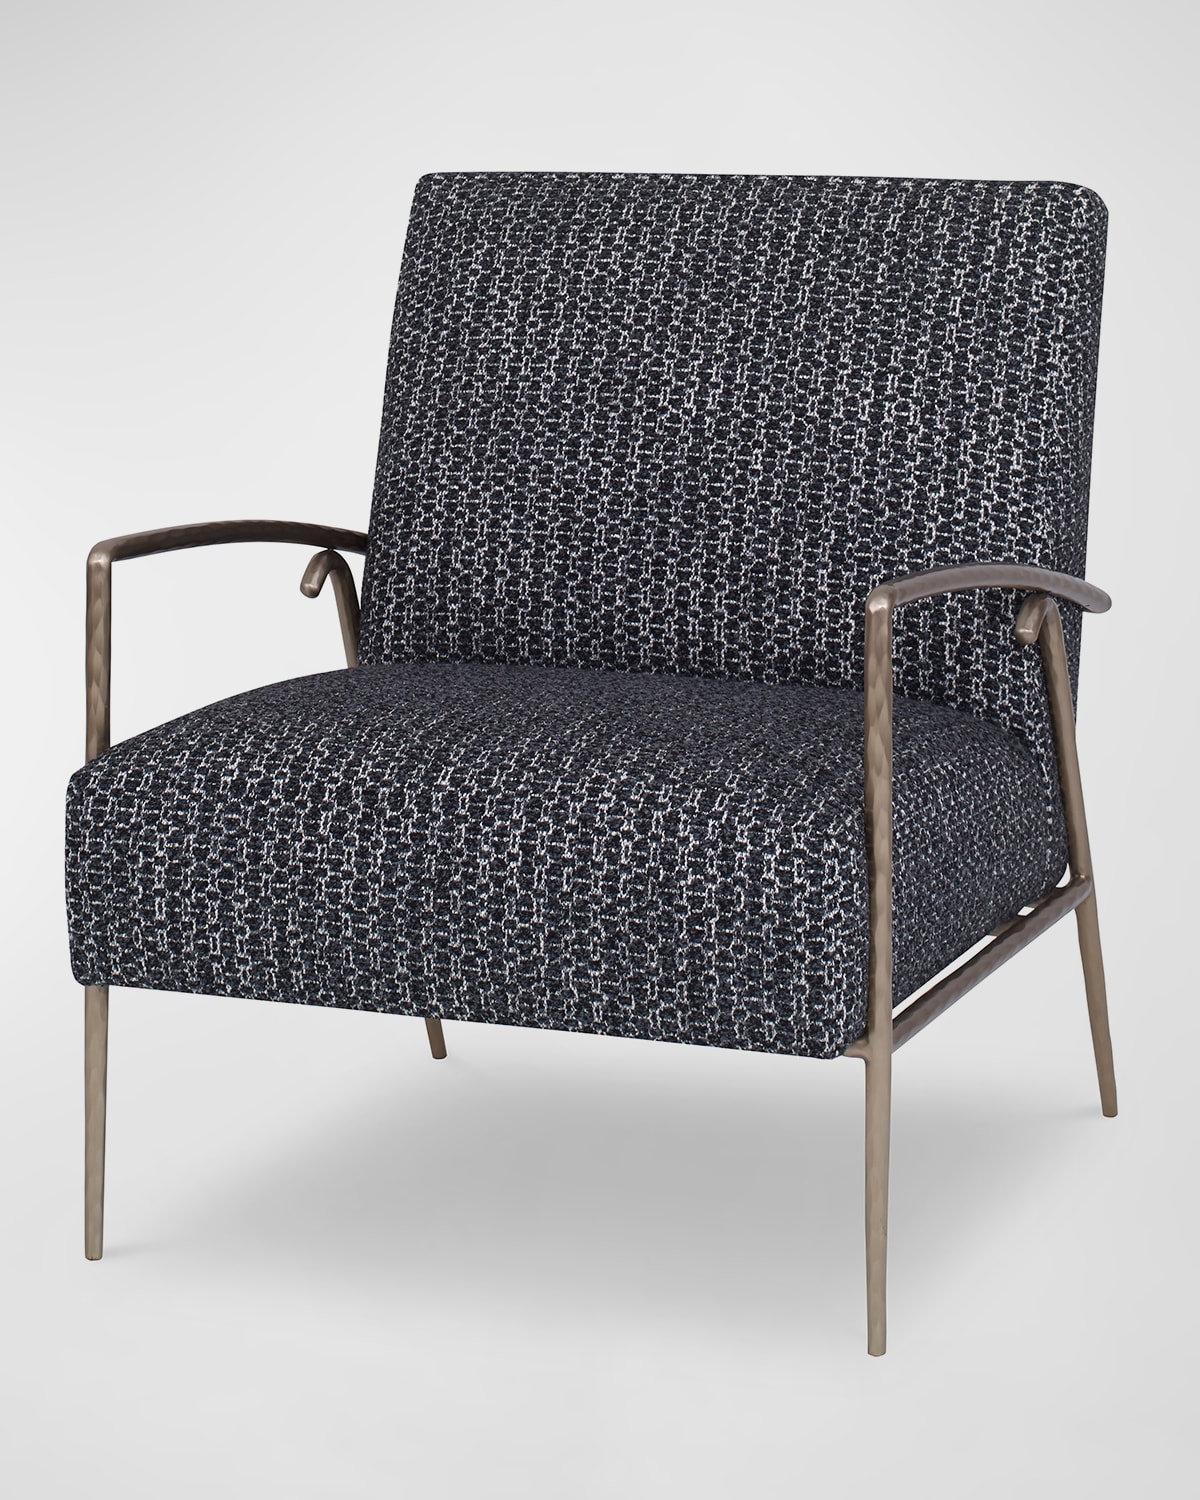 Chiseled Metal Frame Chair